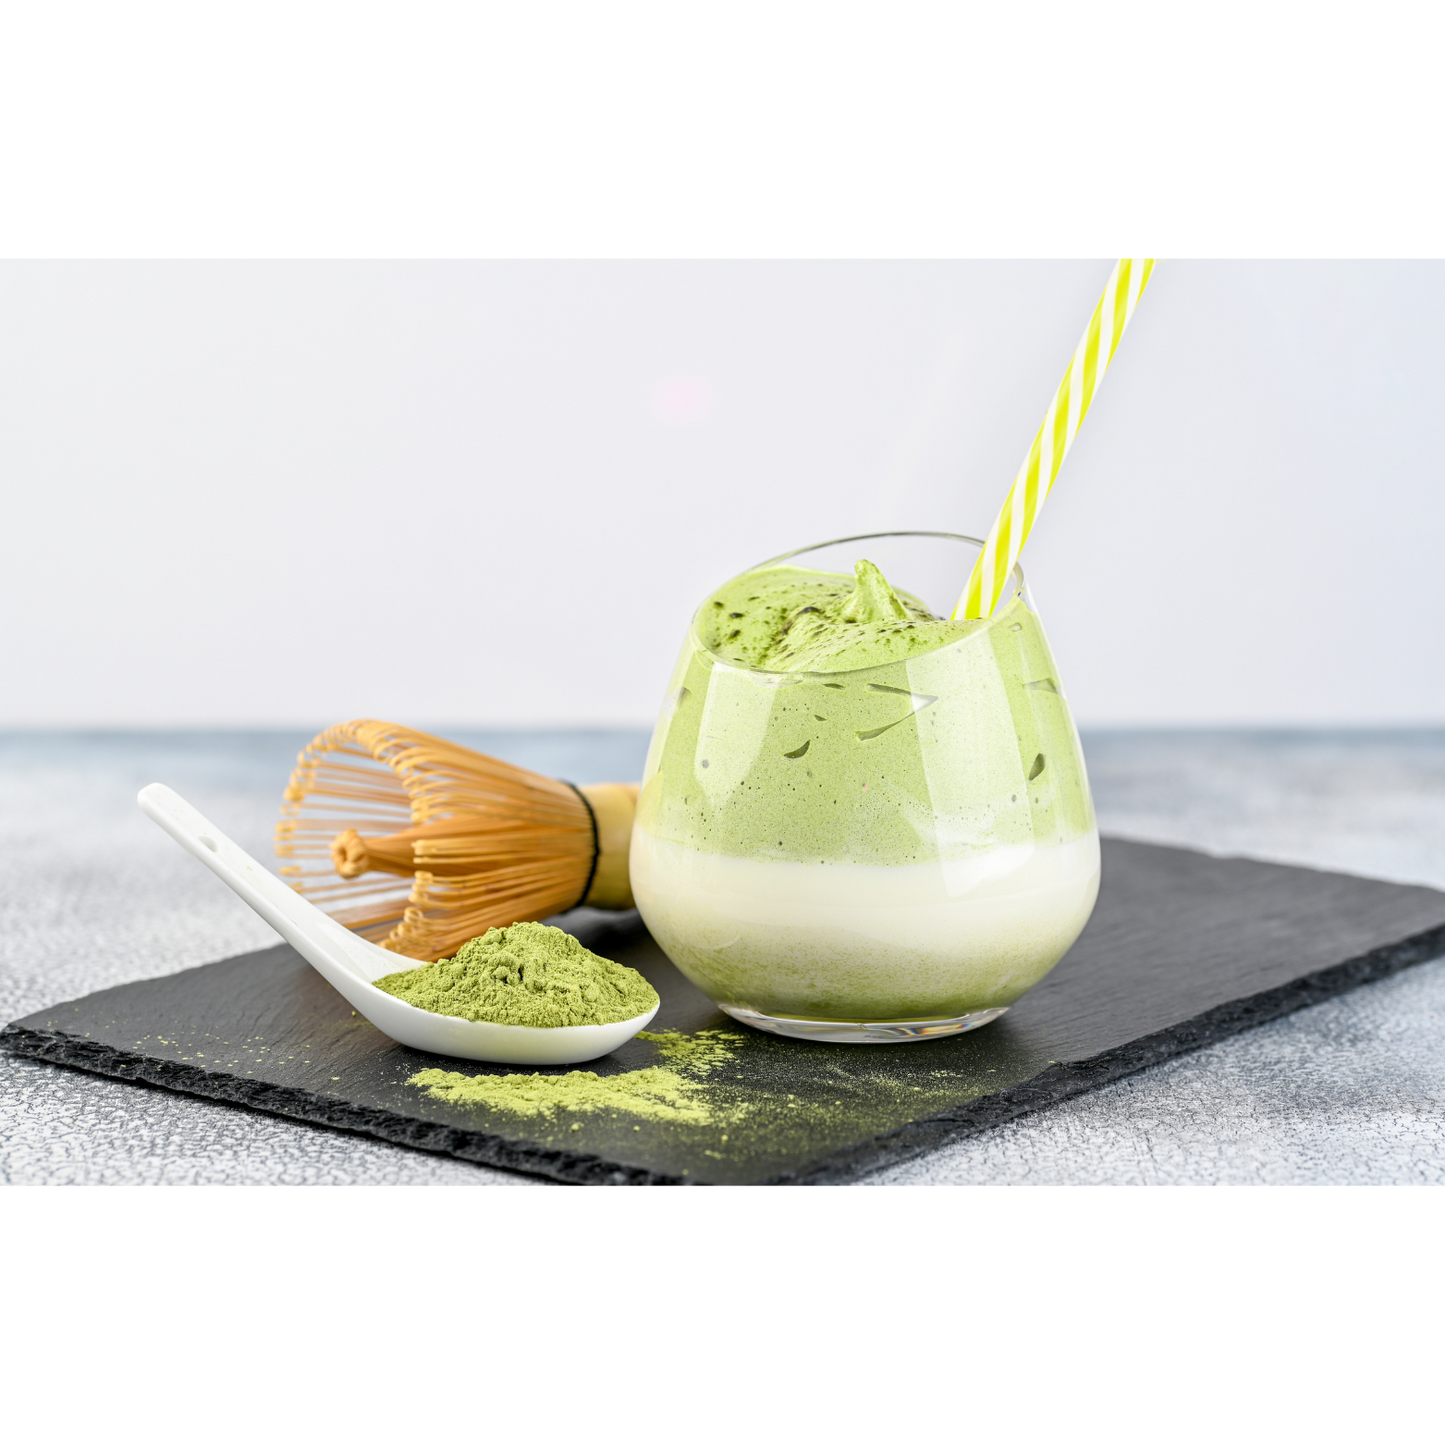 Matcha Green Tea Powder, Ceremonial Grade, High Quality, Vibrate Green Color